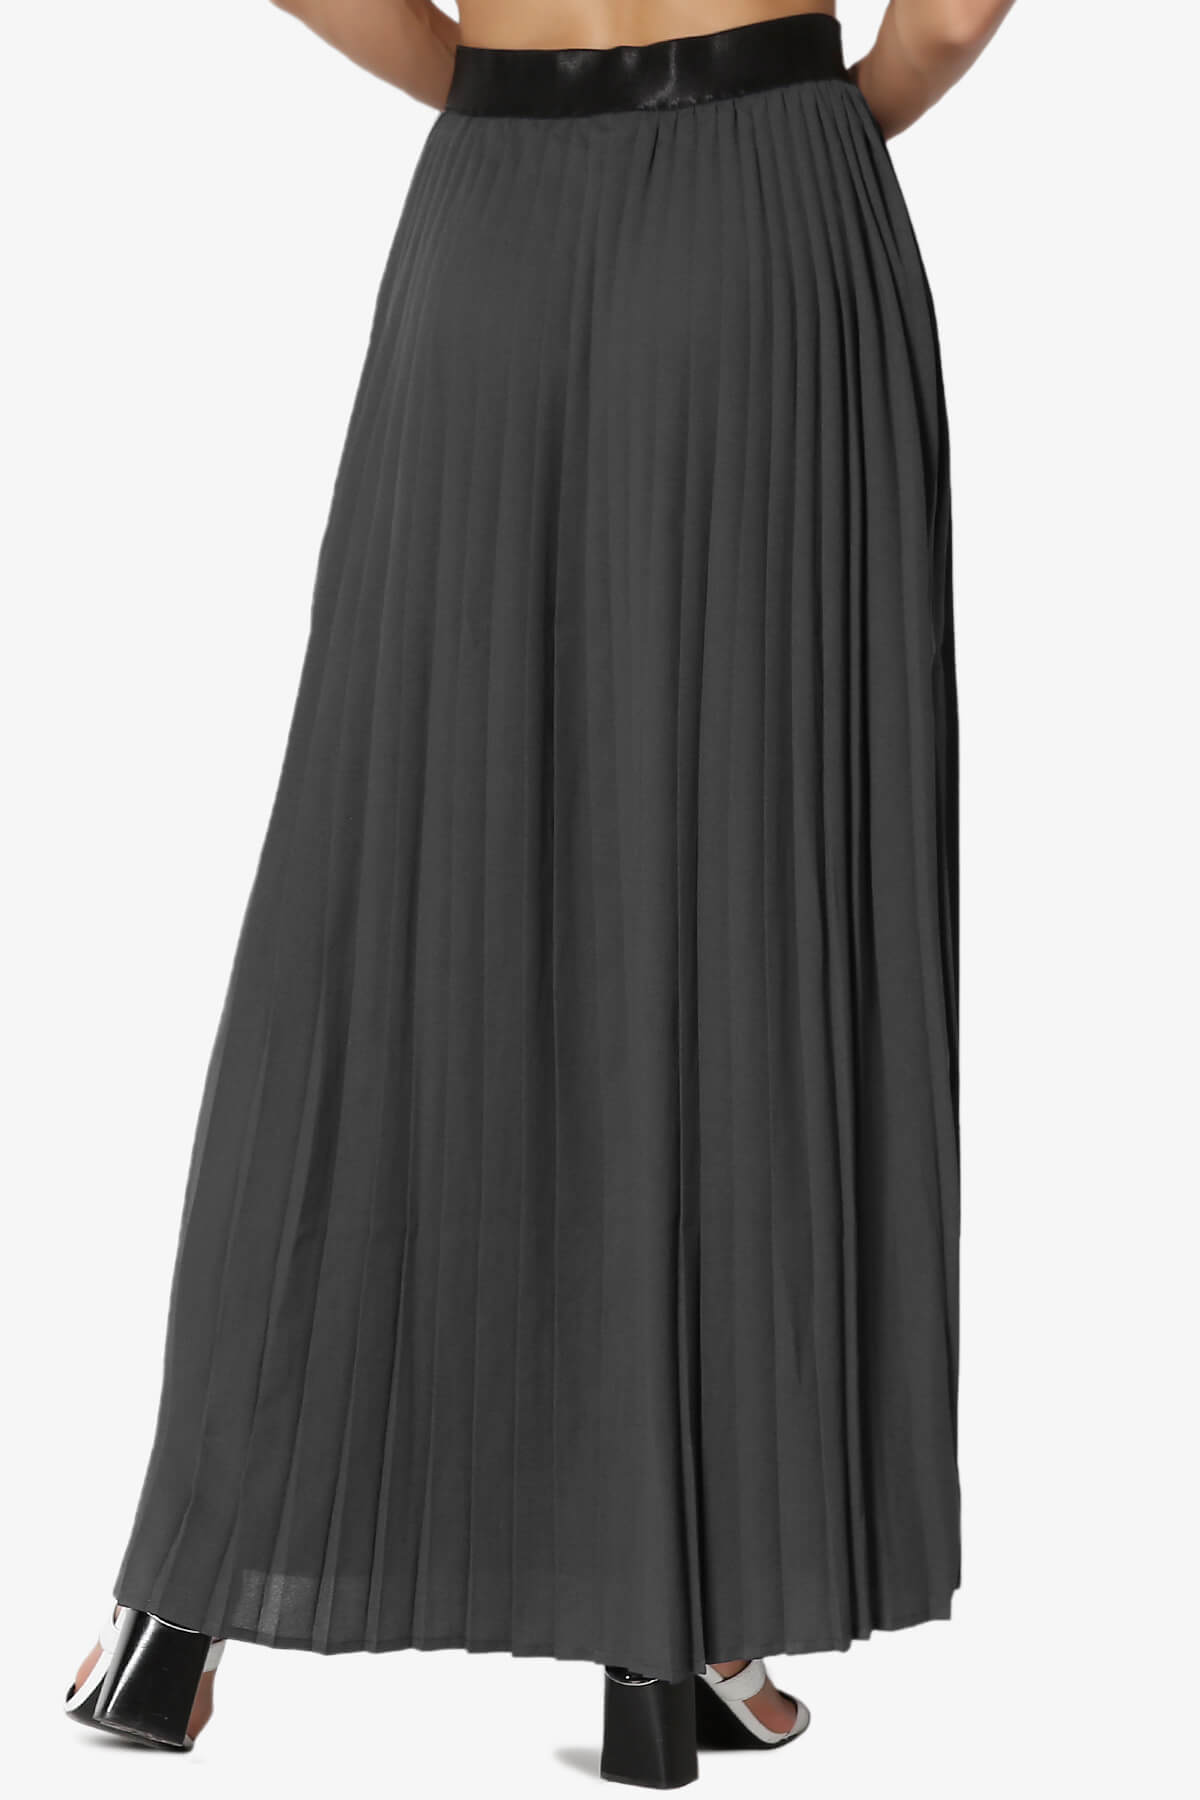 TheMogan Women's Flowy Maxi Pleated Skirt Elegant High Waisted Full-Length Skirt for All Occasions